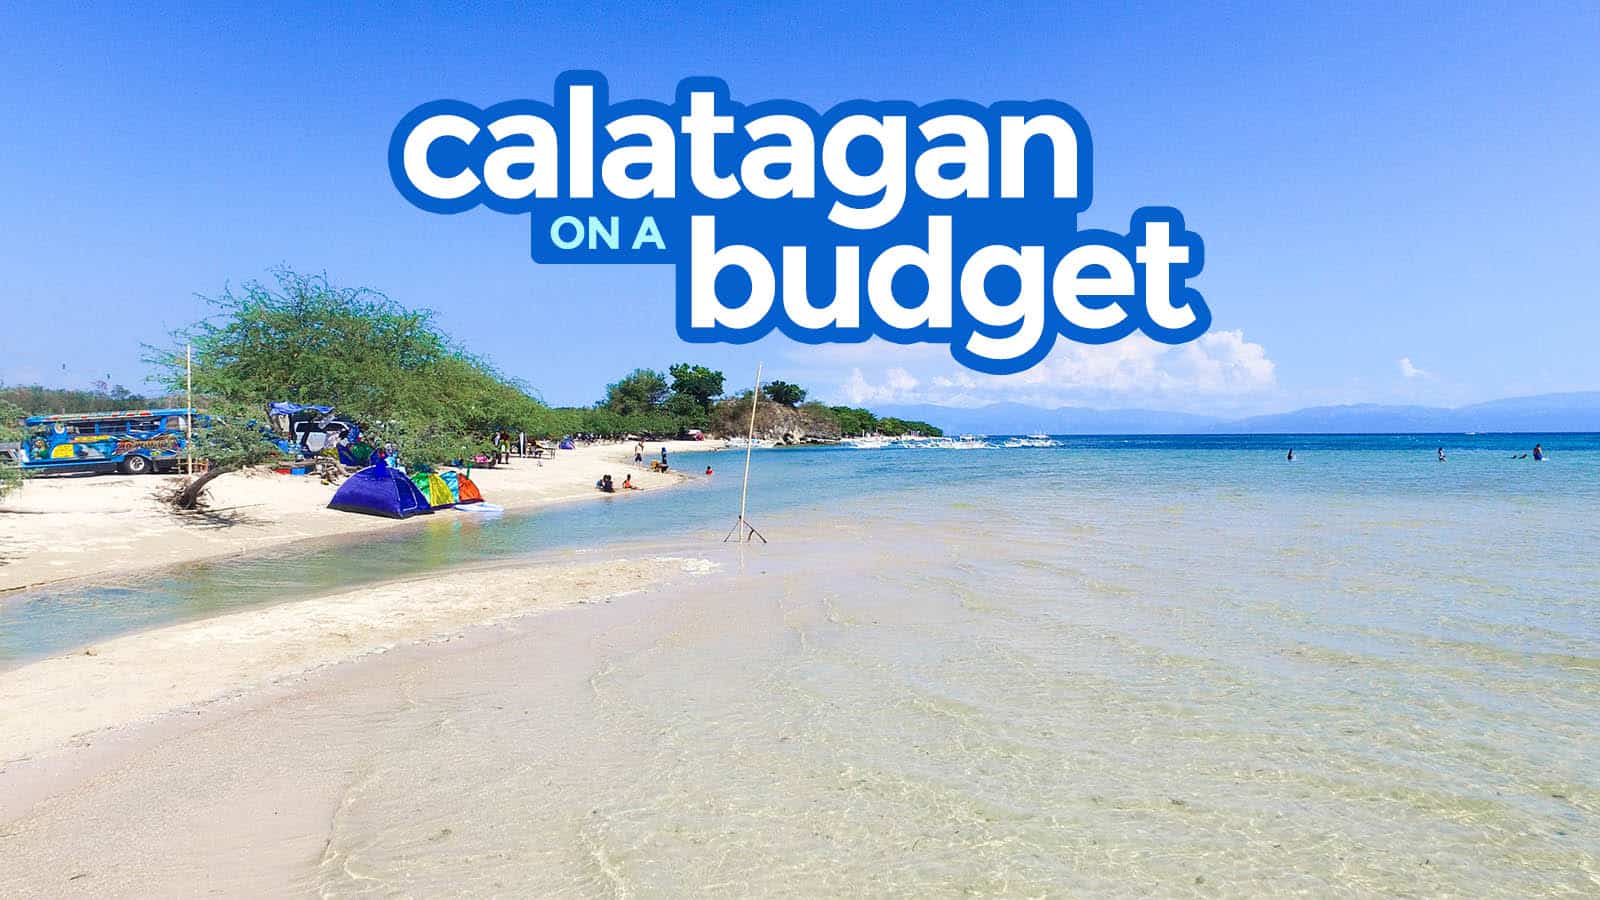 Calatagan Batangas Travel Guide With Budget Itinerary